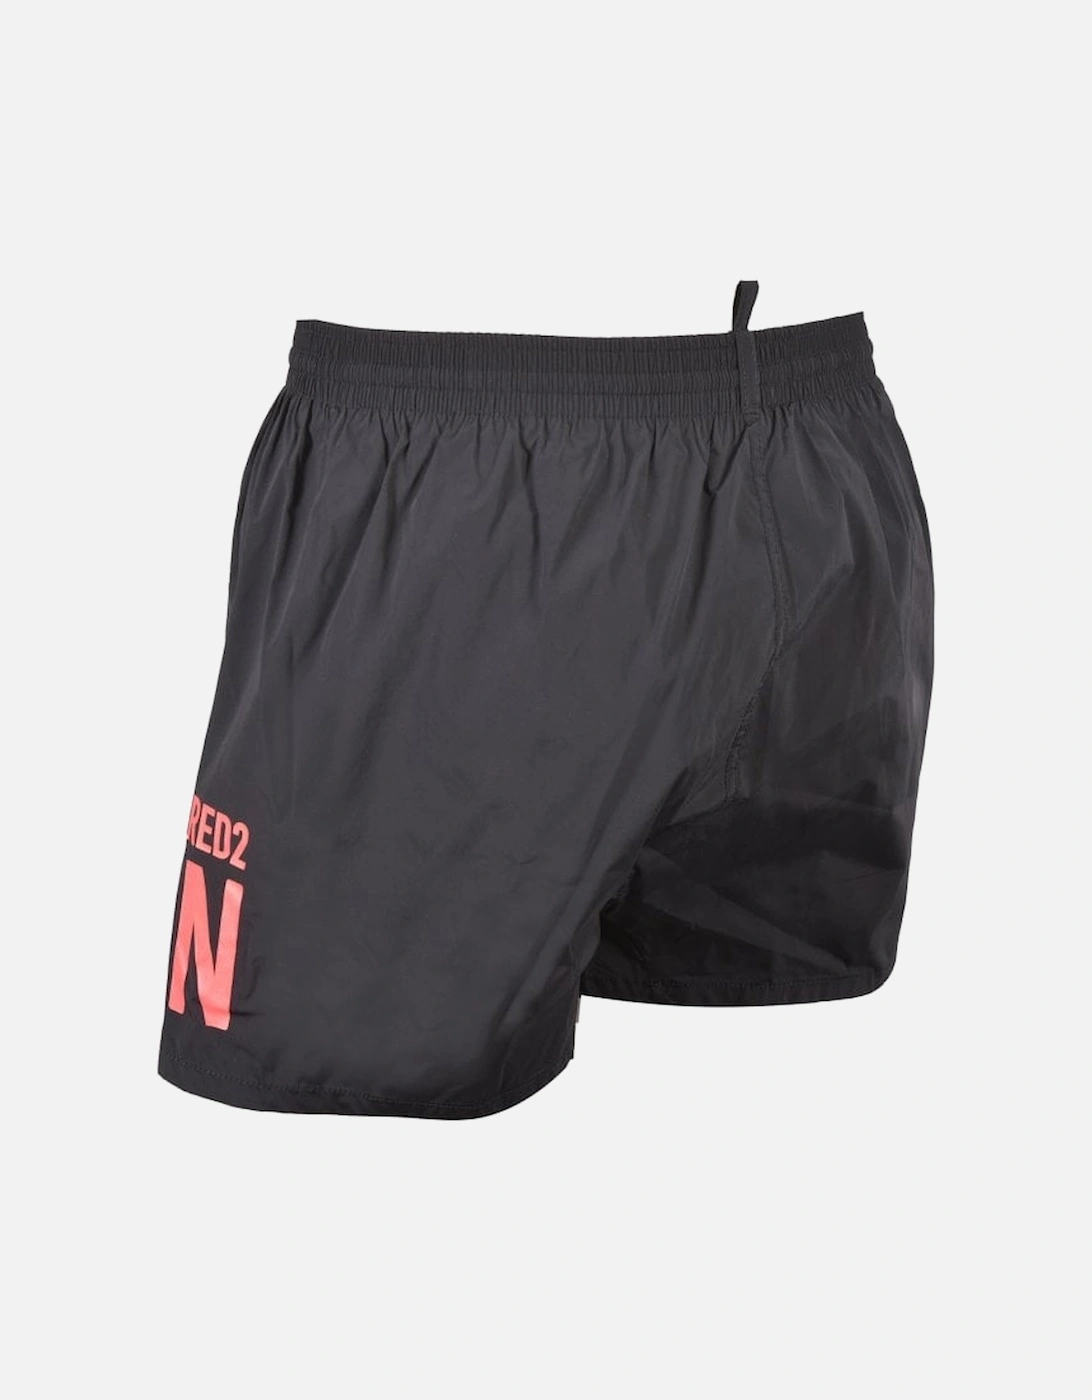 ICON Front Logo Swim Shorts, Black/coral